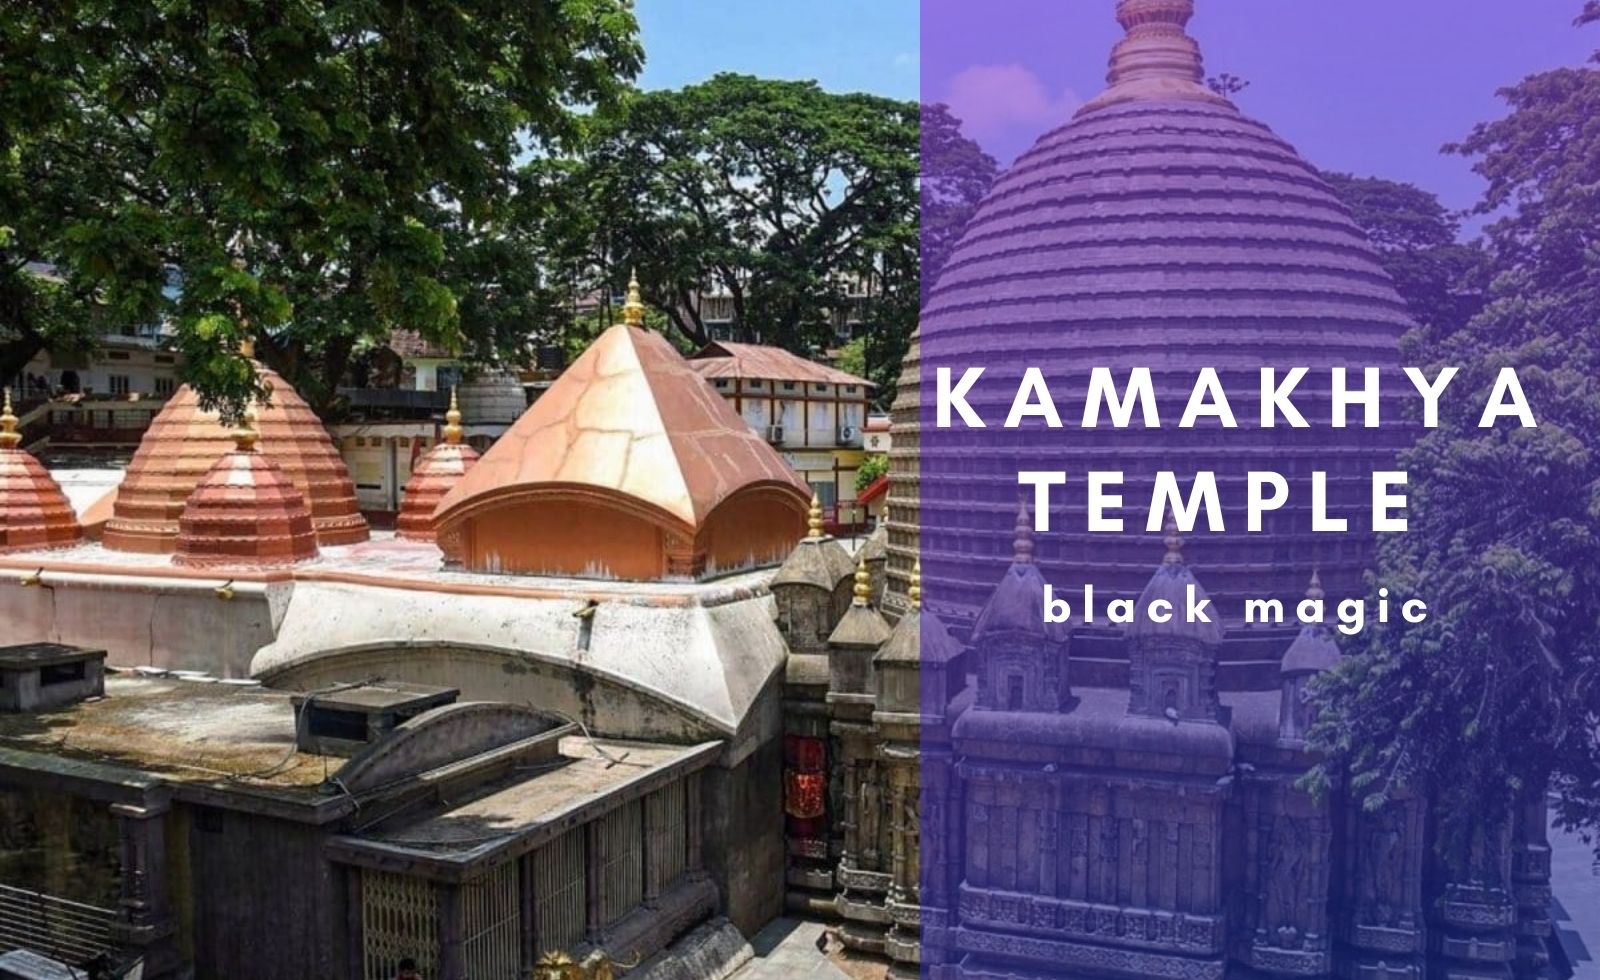 Kamakhya temple black magic